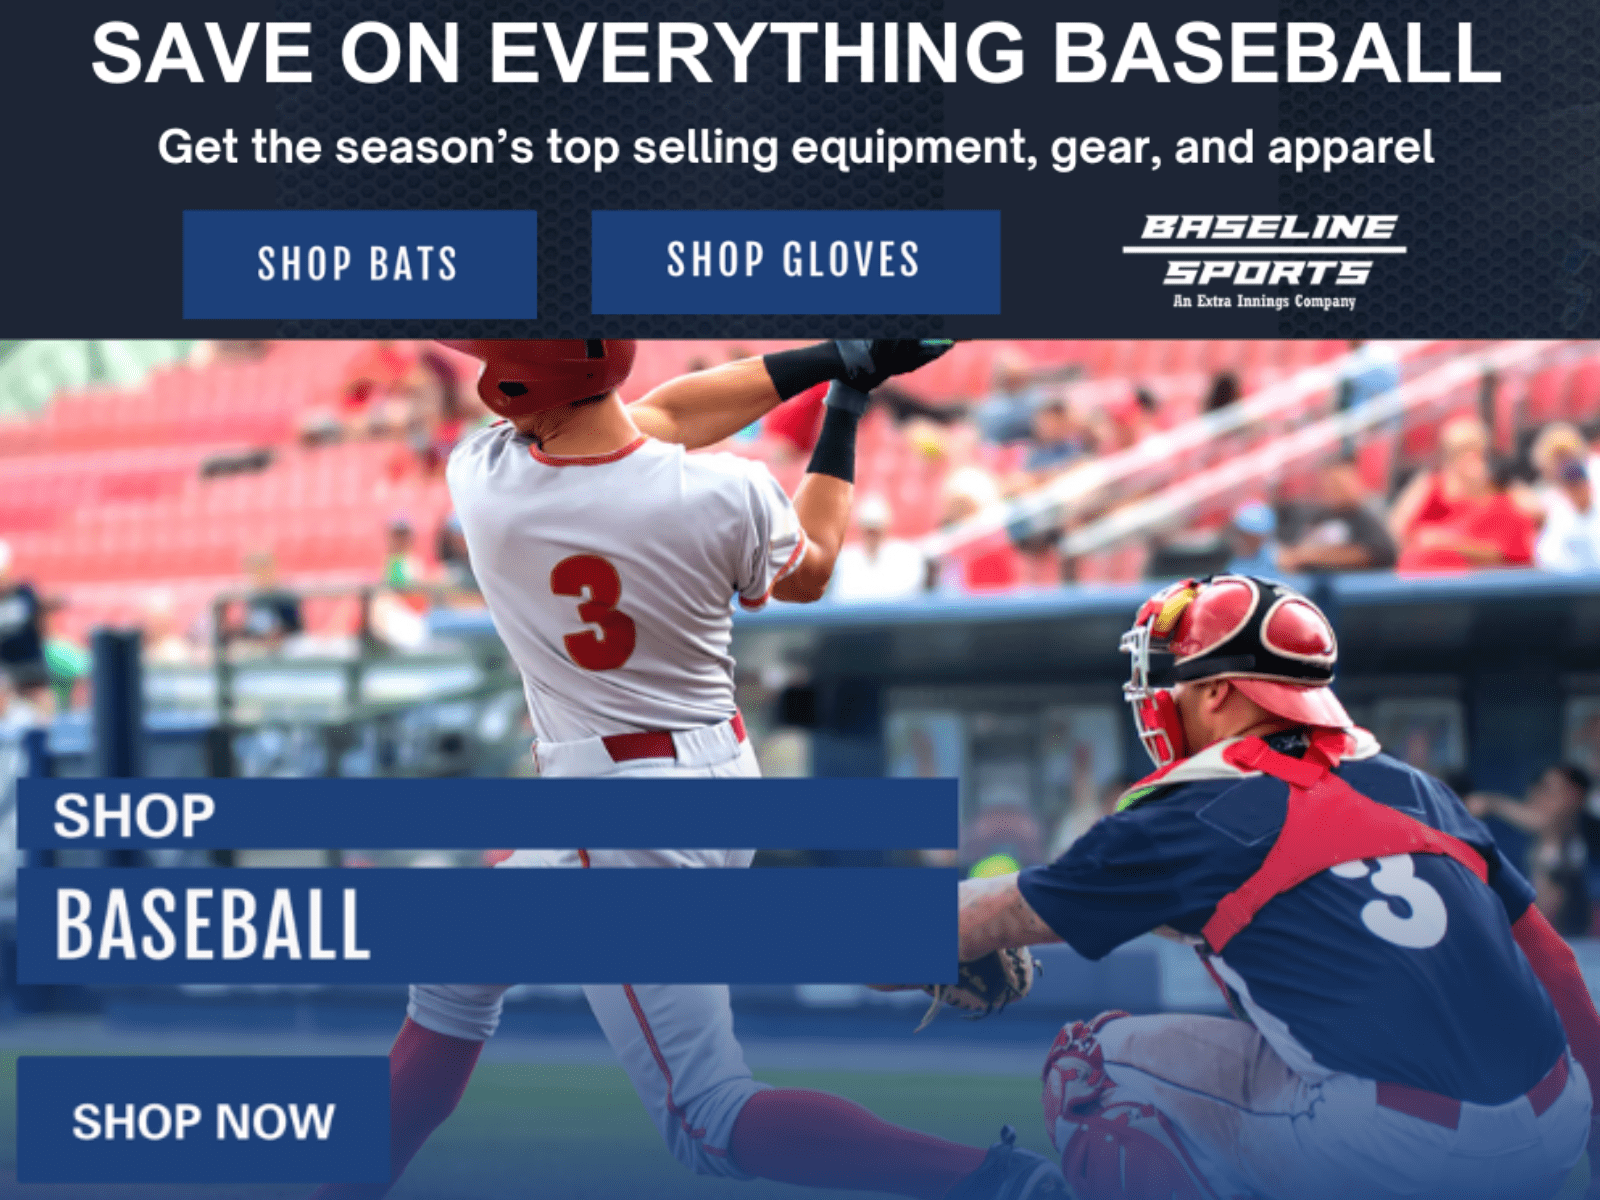 Baseline Sports shop gloves bats and equipment